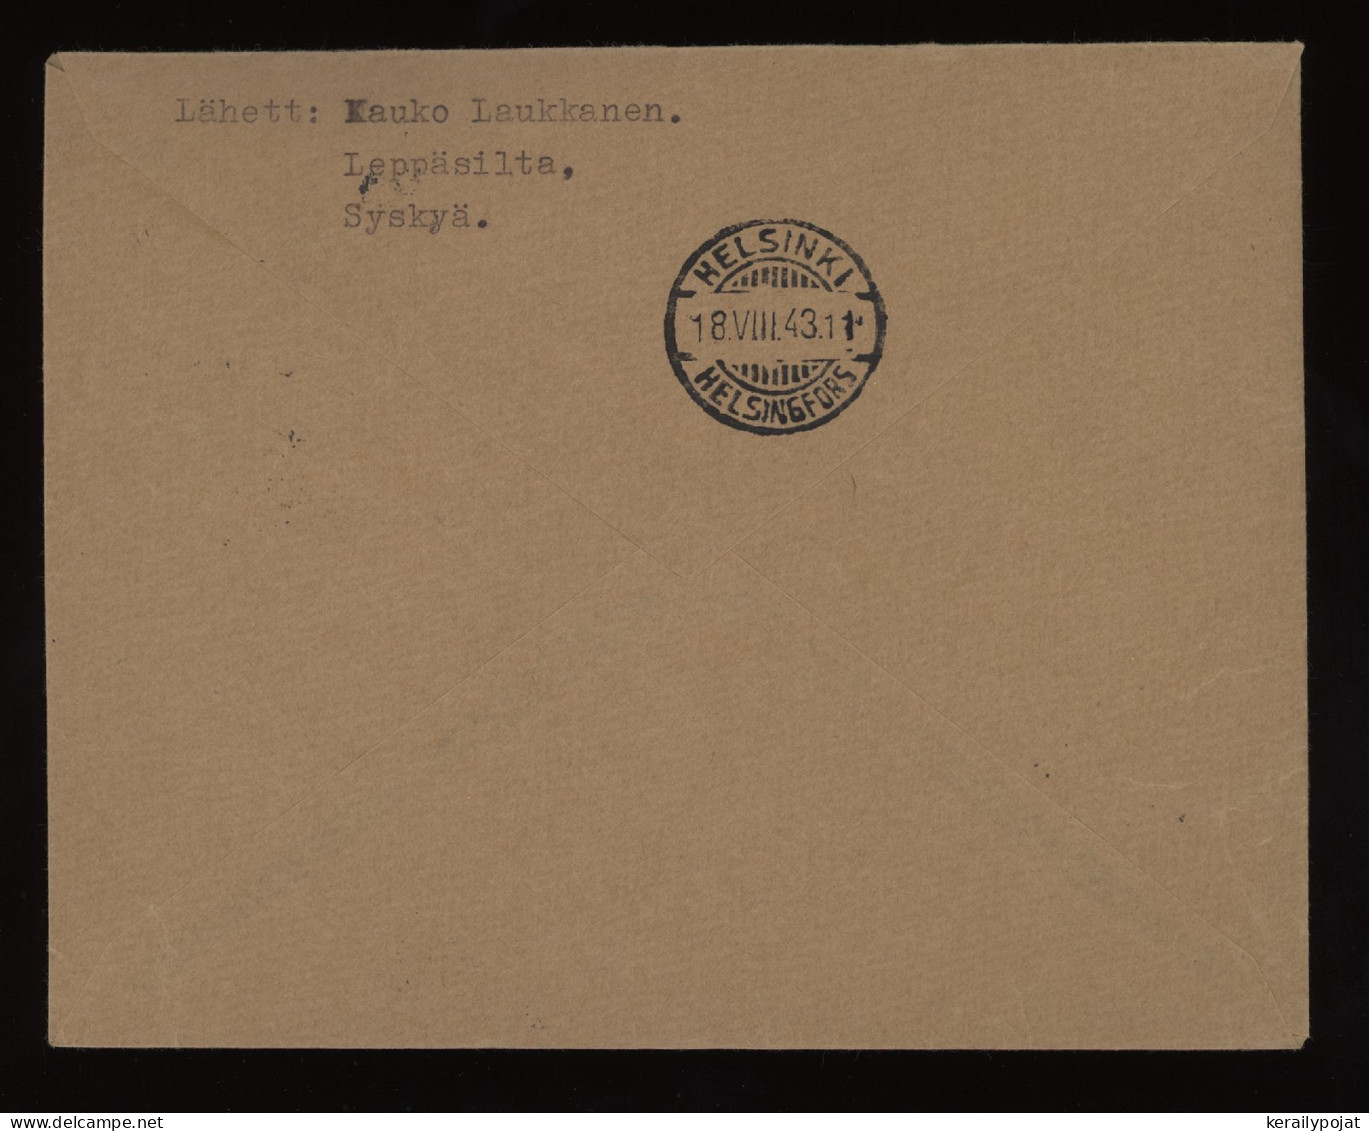 Finland 1943 Impilahti Registered Cover__(10361) - Briefe U. Dokumente